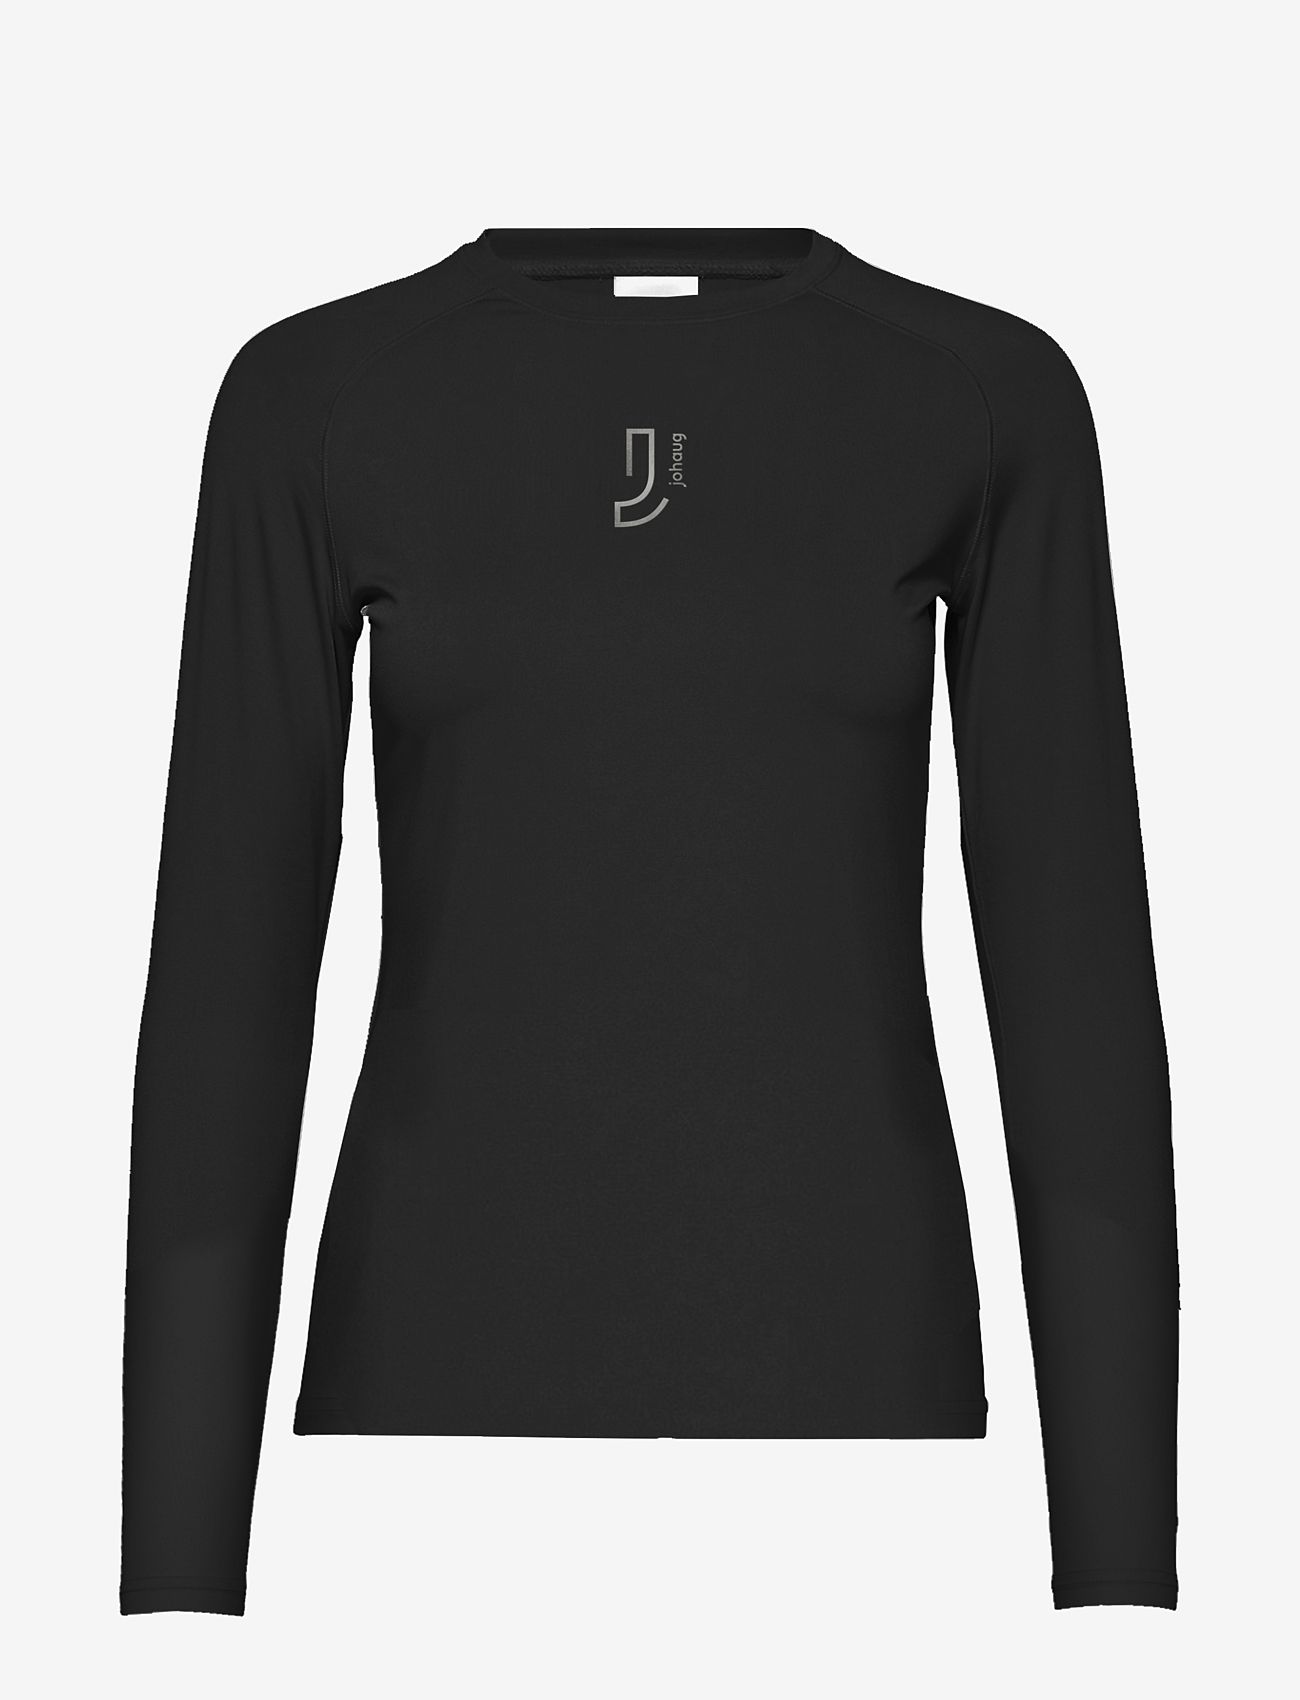 Johaug - Elemental Long Sleeve 2.0 - pitkähihaiset topit - black - 0